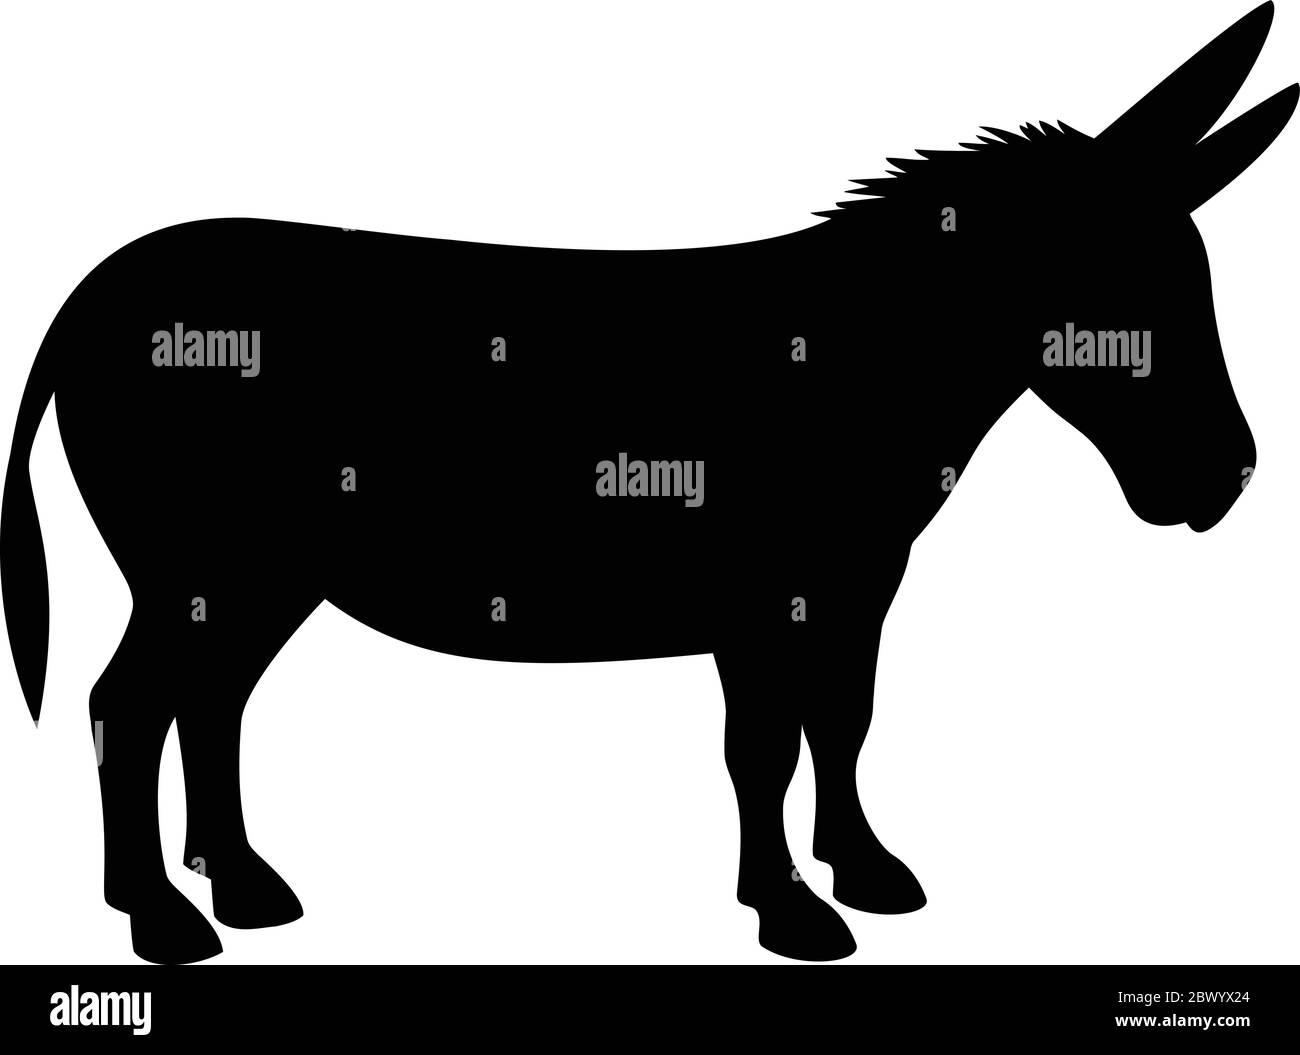 Donkey logo hi-res stock photography and images - Alamy